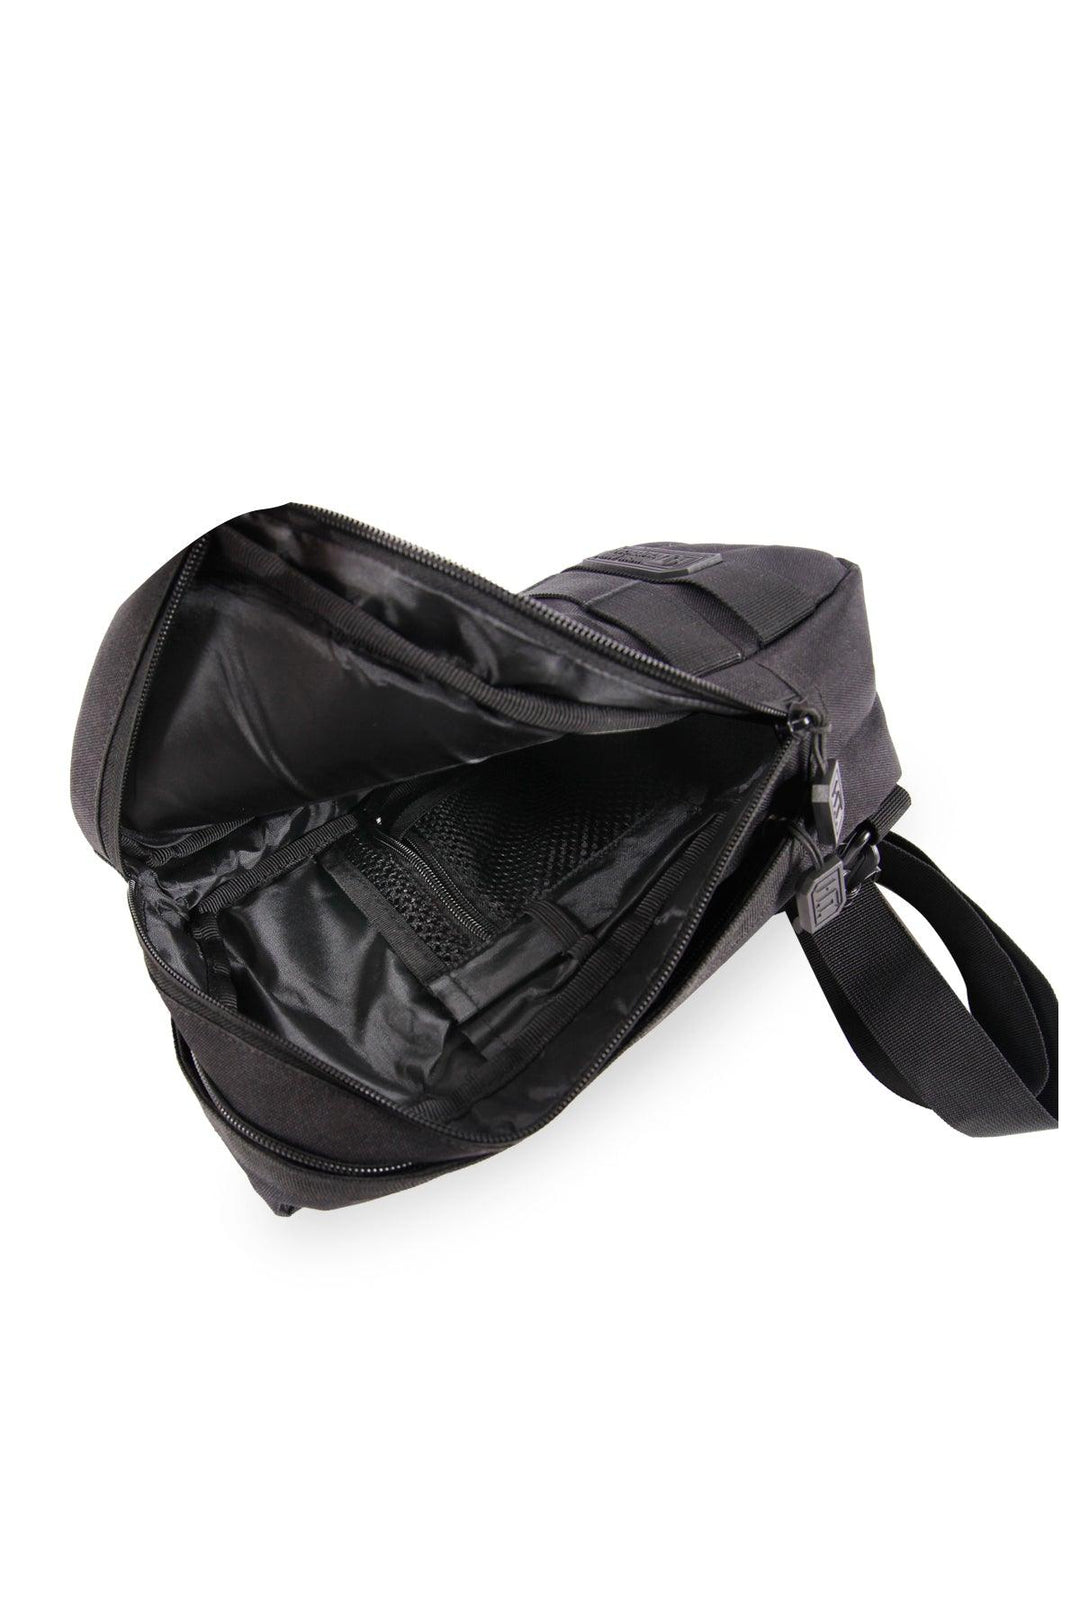 Entity Tech Sling Bag Large 10L, Tech Shoulder Bag